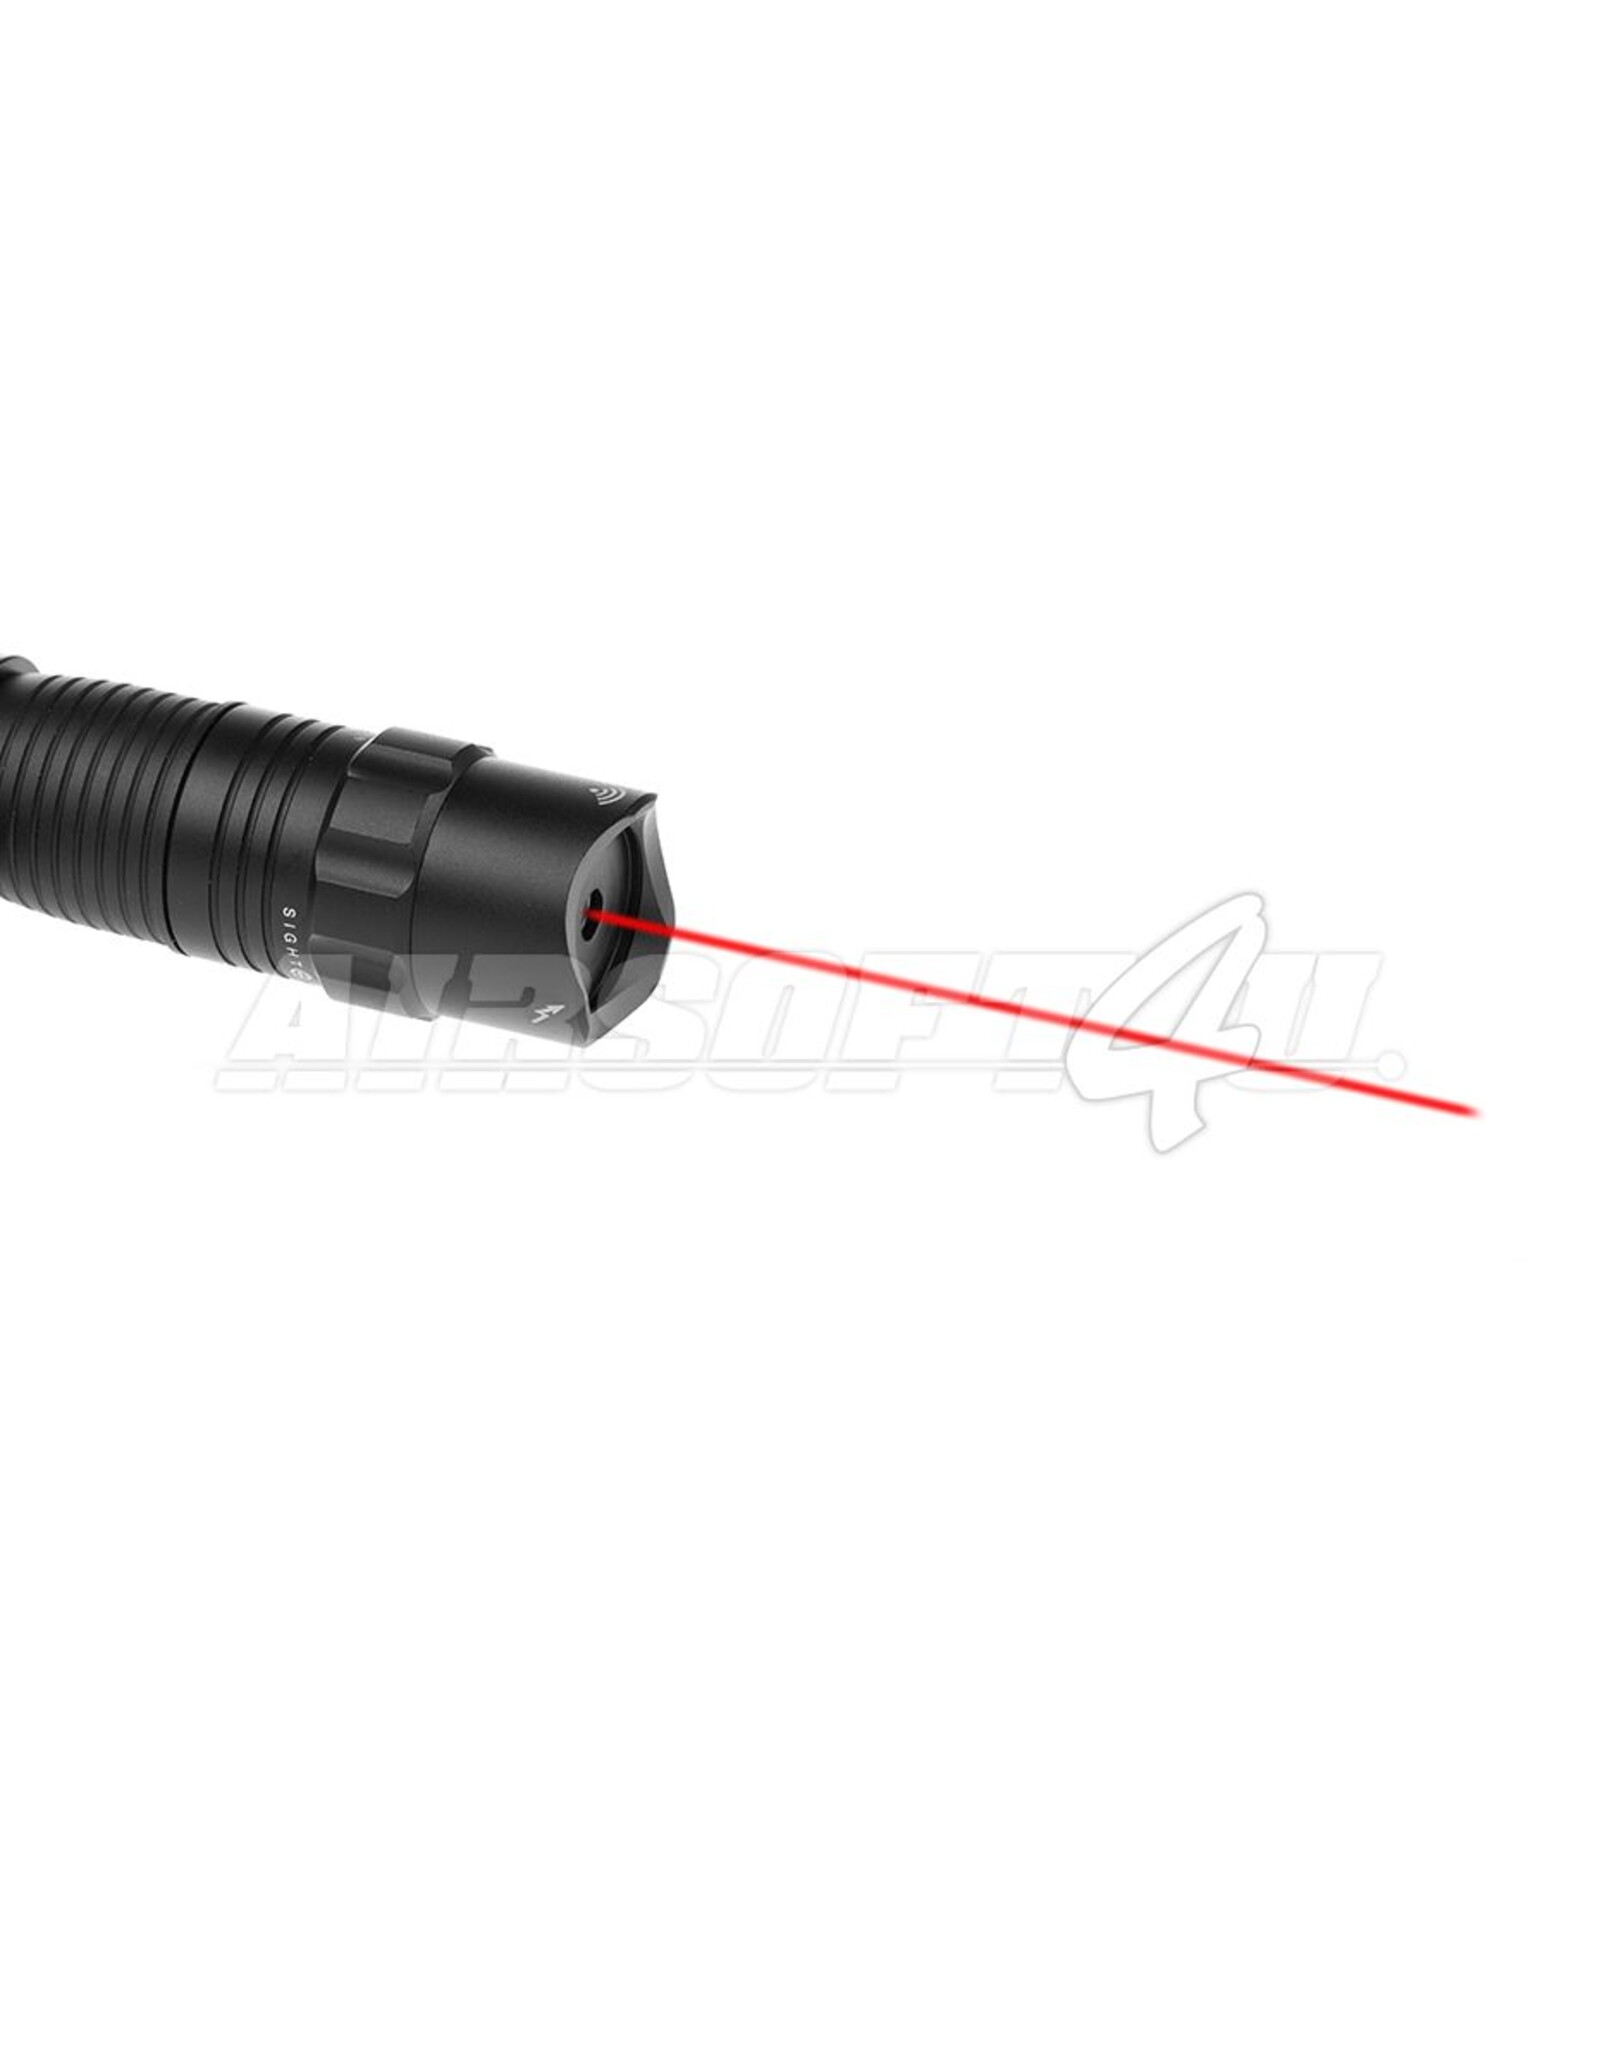 AT5R Red Laser Designator Kit (Sightmark)